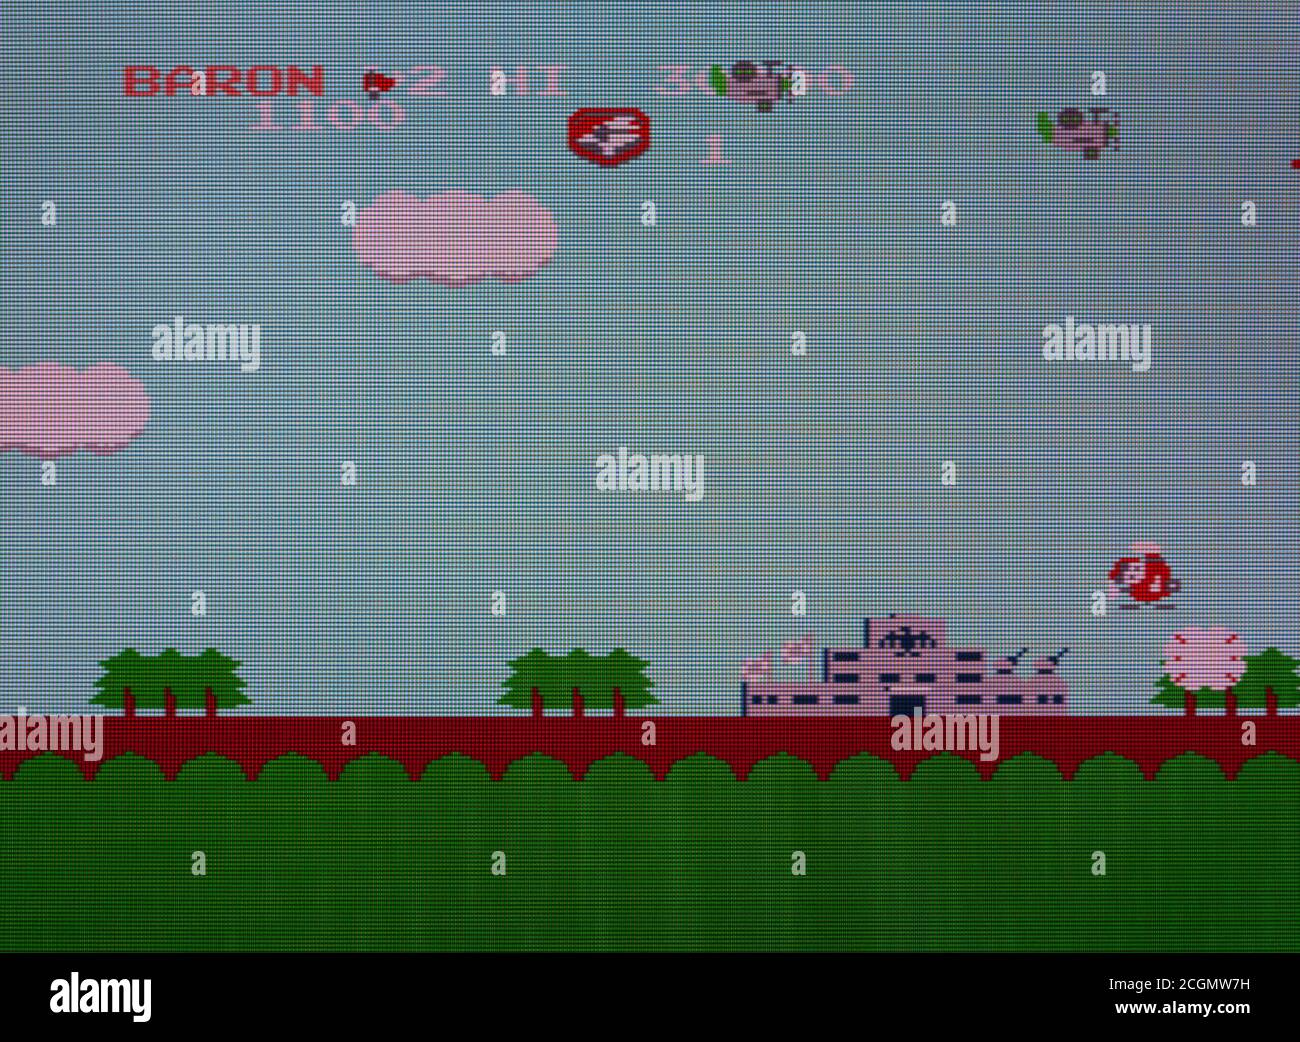 Sky Kid - Nintendo Entertainment System - NES Videogame - Solo per uso editoriale Foto Stock